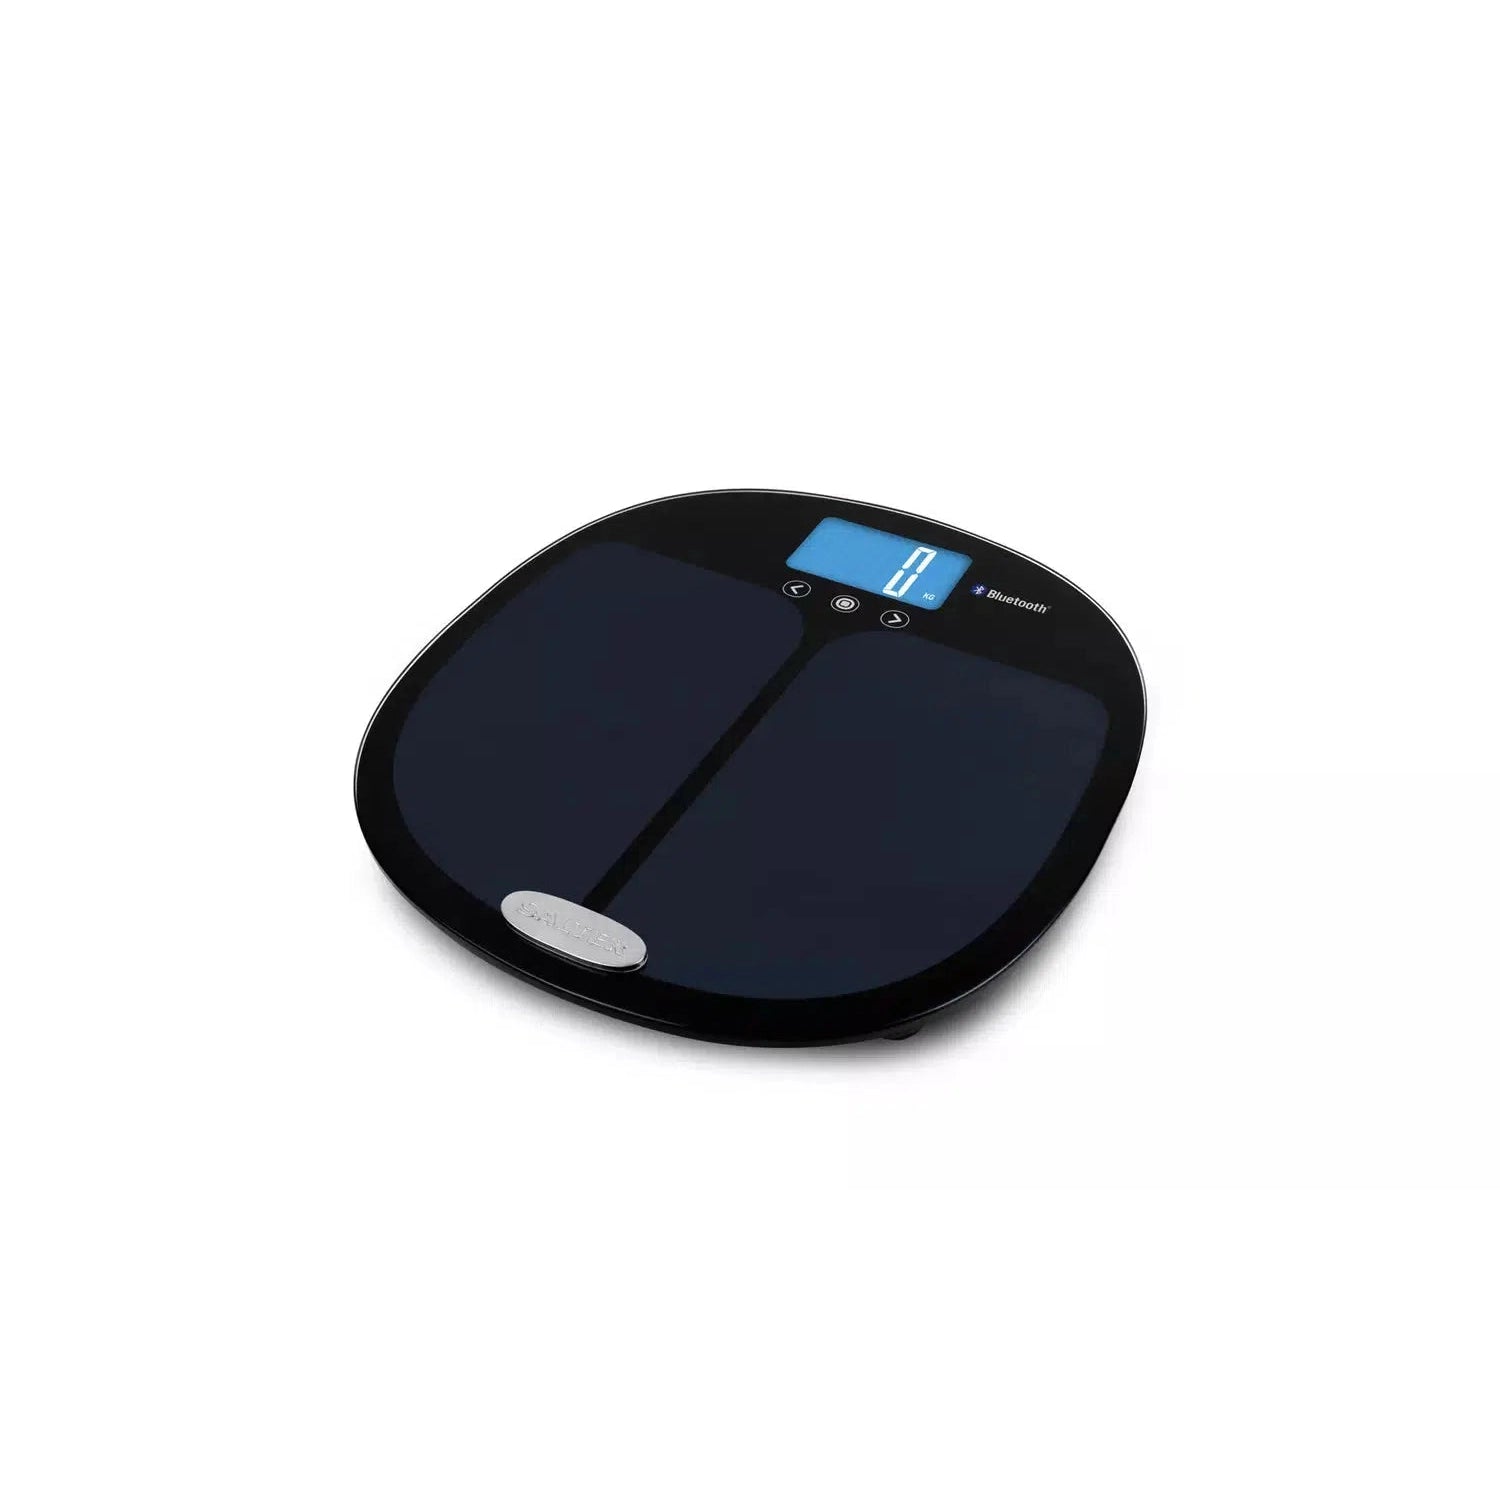 Salter Bluetooth Smart Bathroom Scales - Black